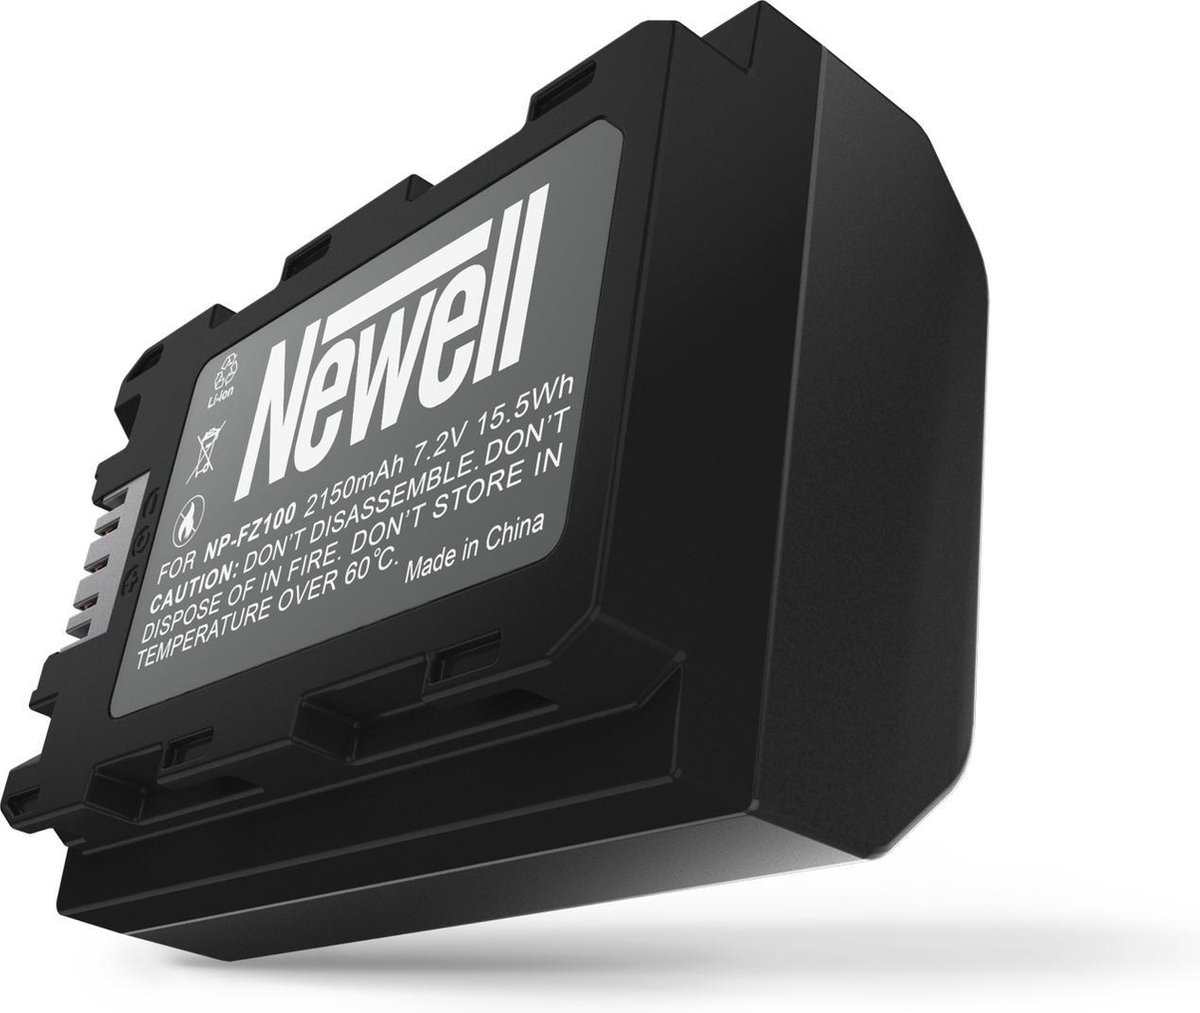 Newell NP-FZ100 1620mAh Accu Batterij voor Digitale Camera